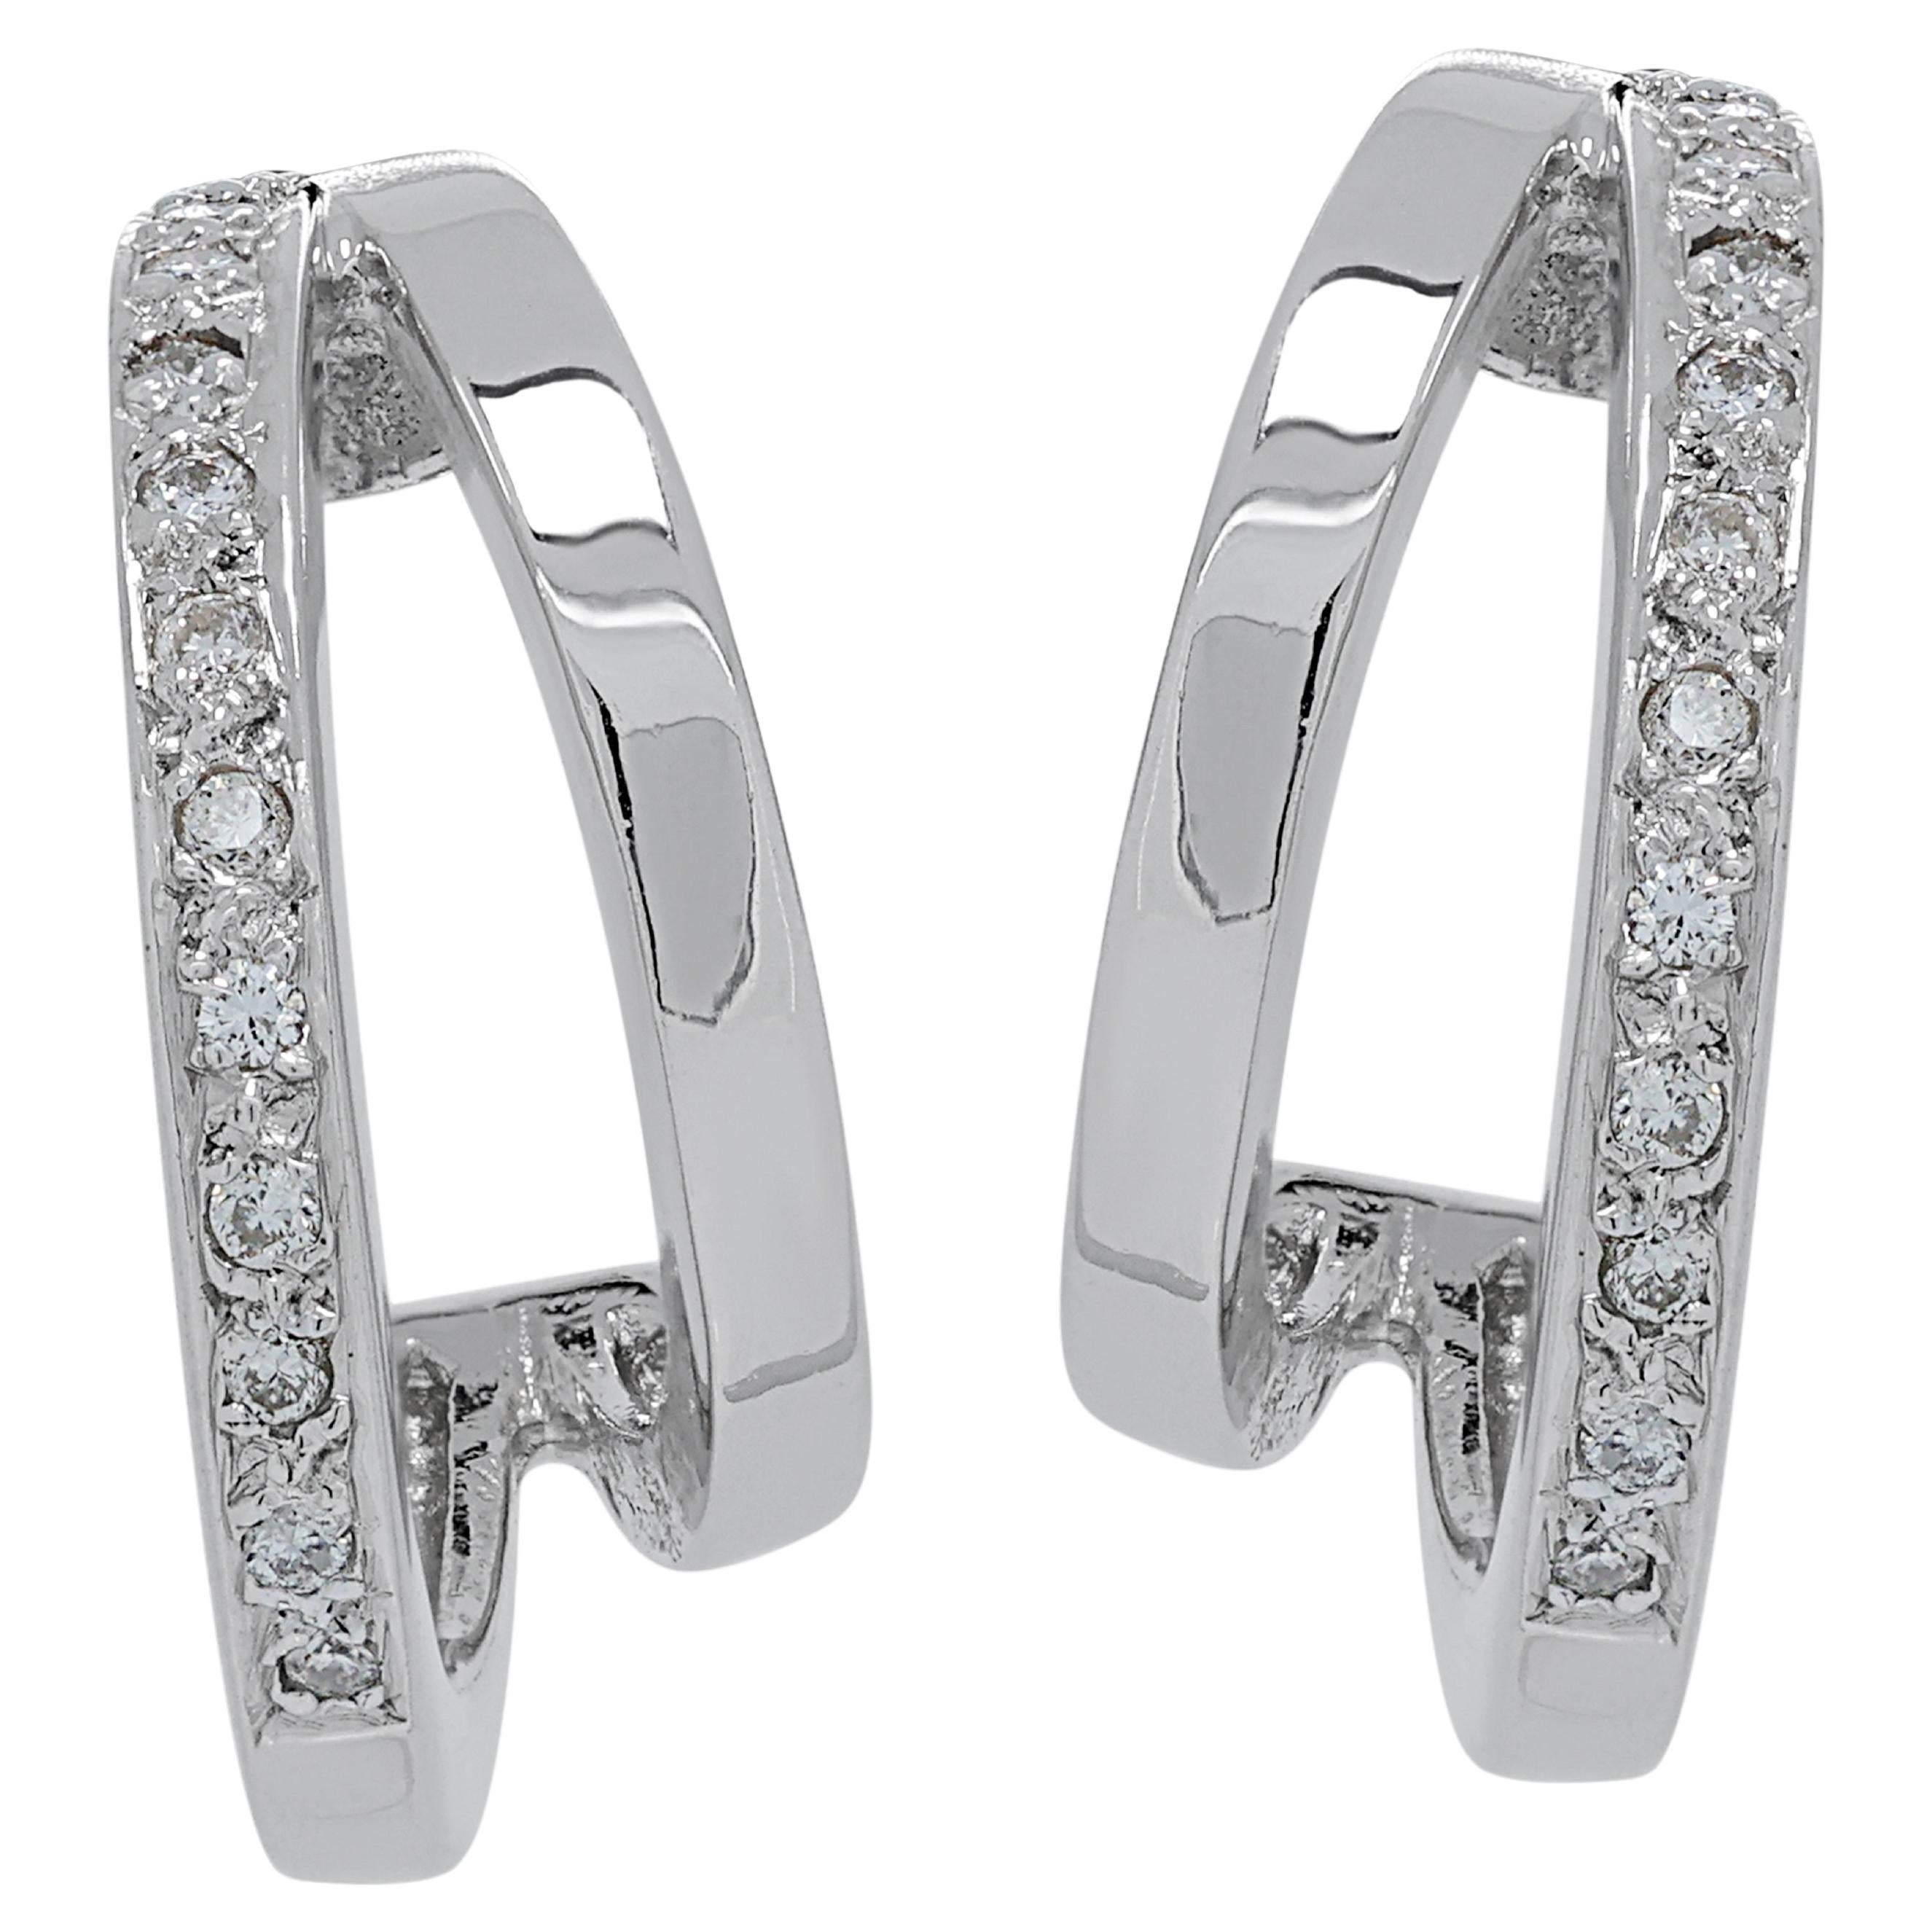 Lustrous 0.12ct Diamonds Hoop Earrings in 18K White Gold